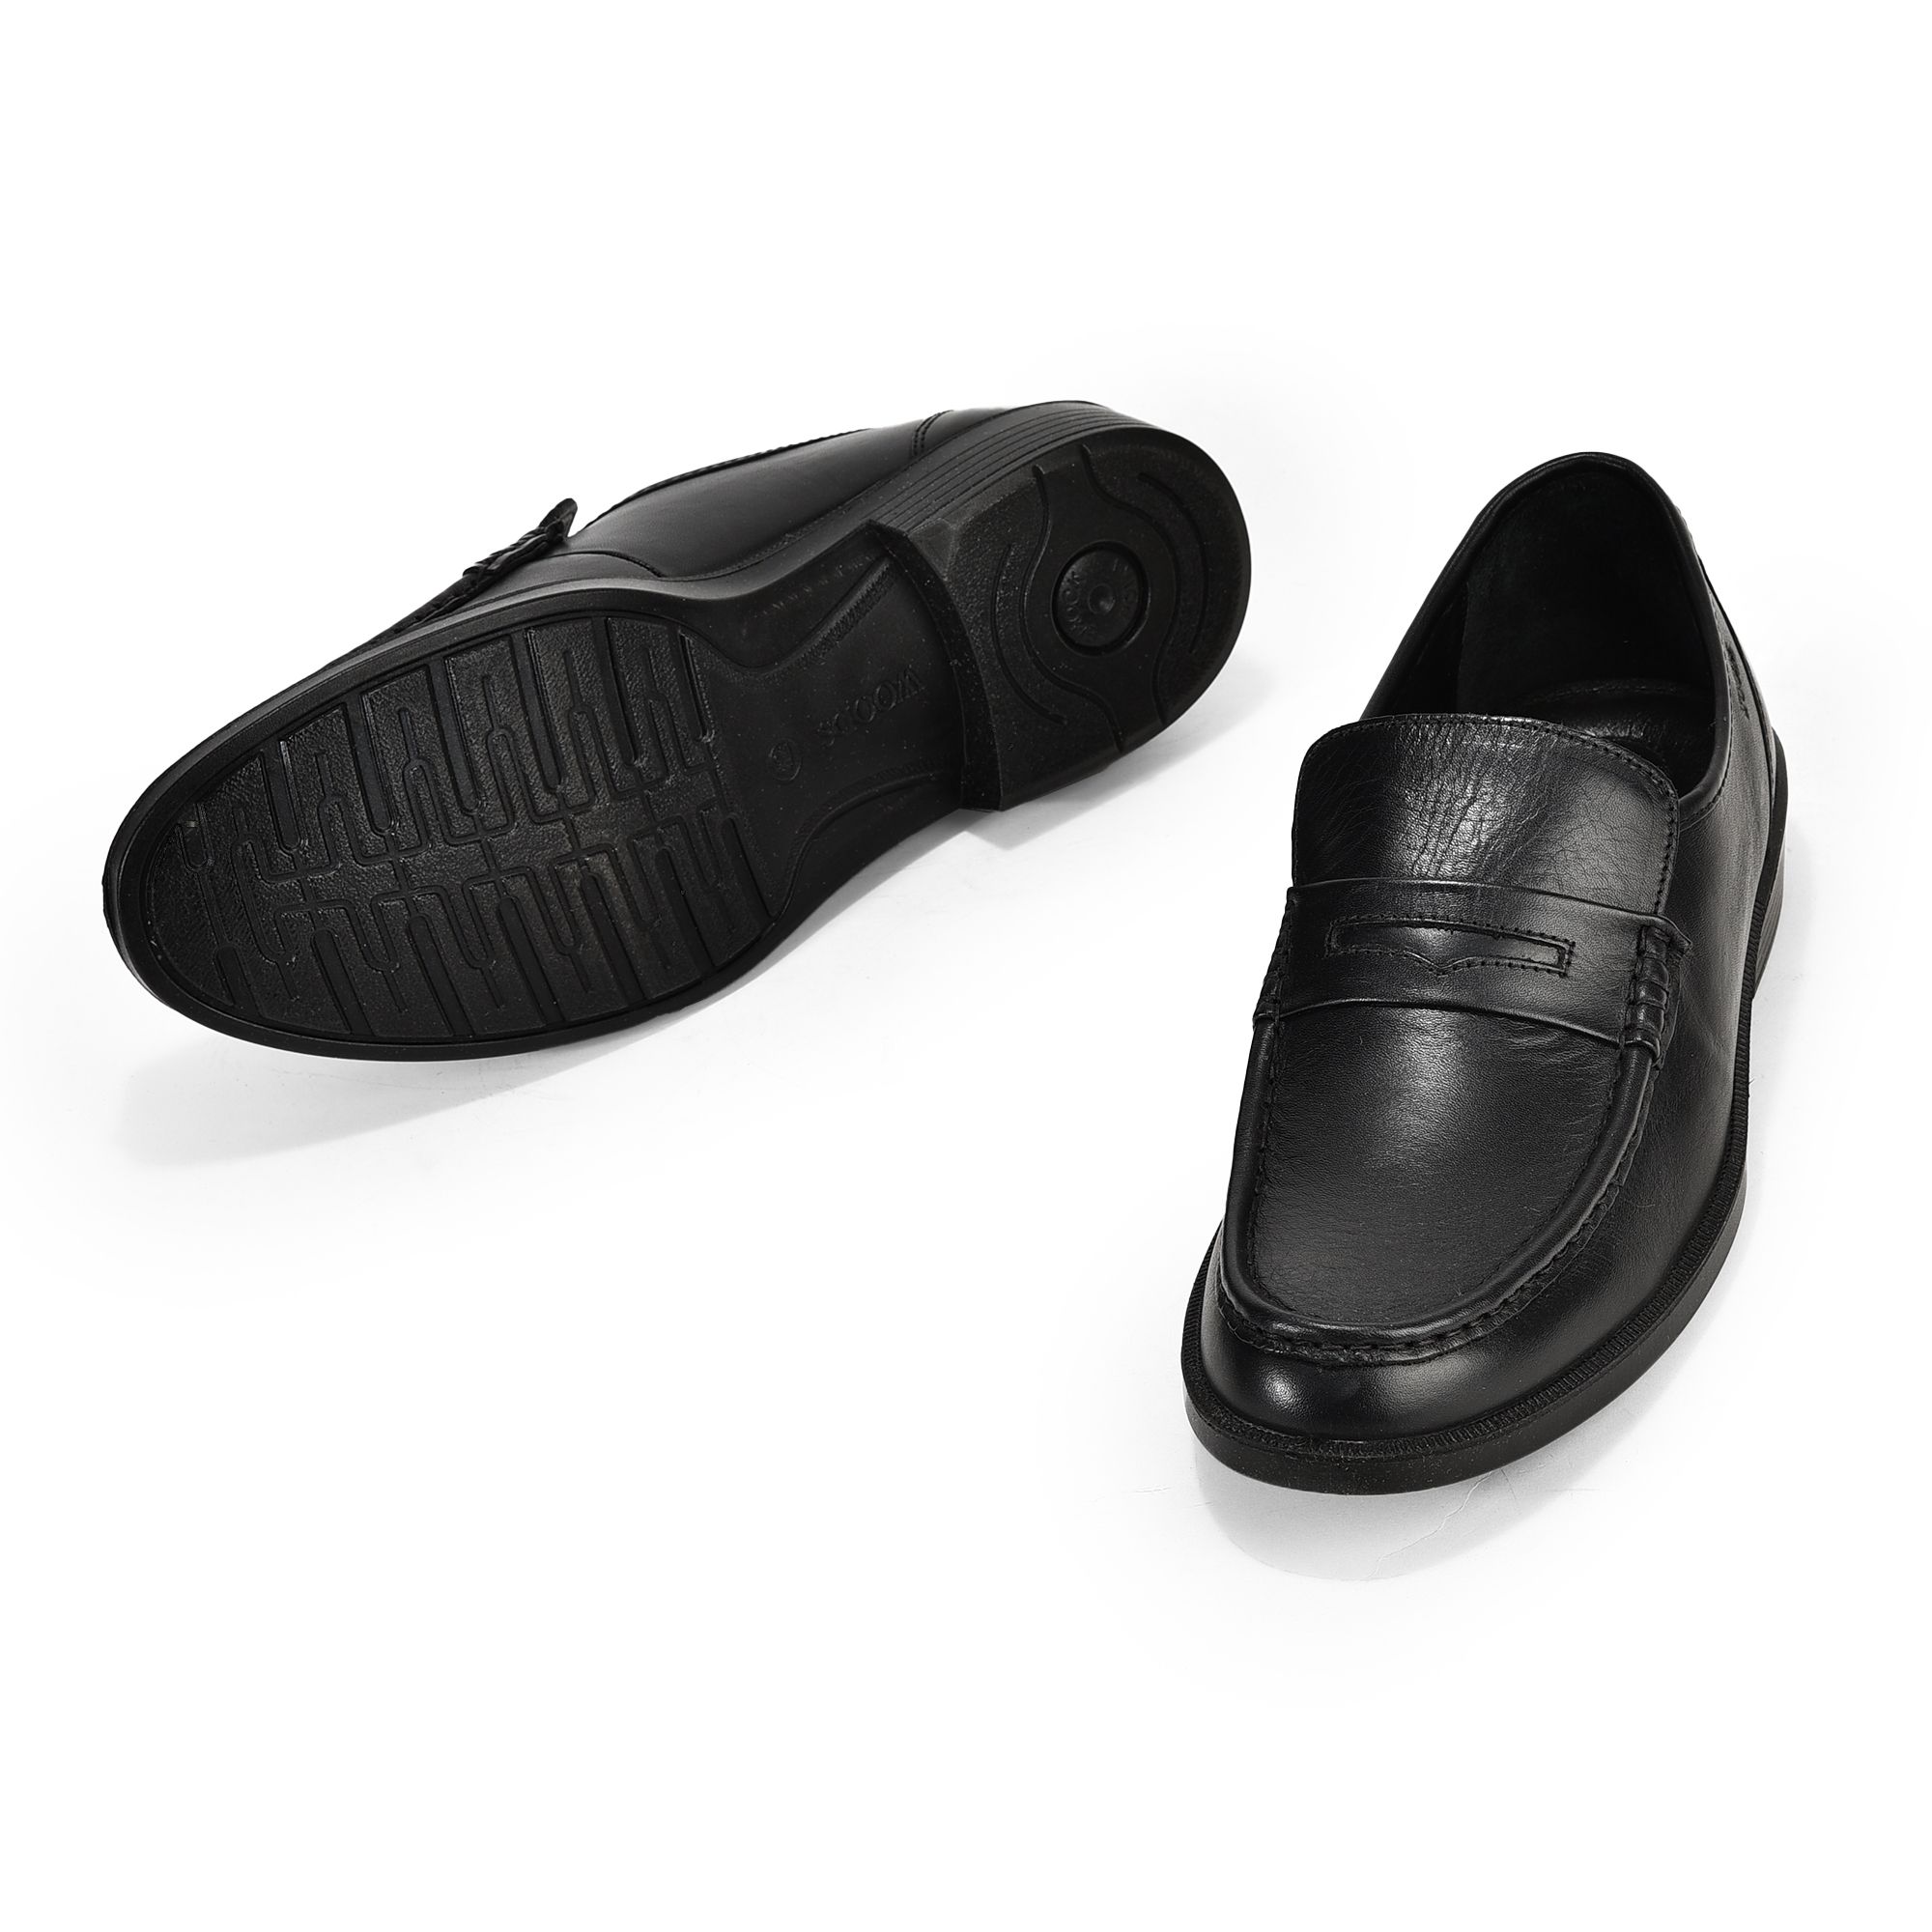 Black penny loafers for men